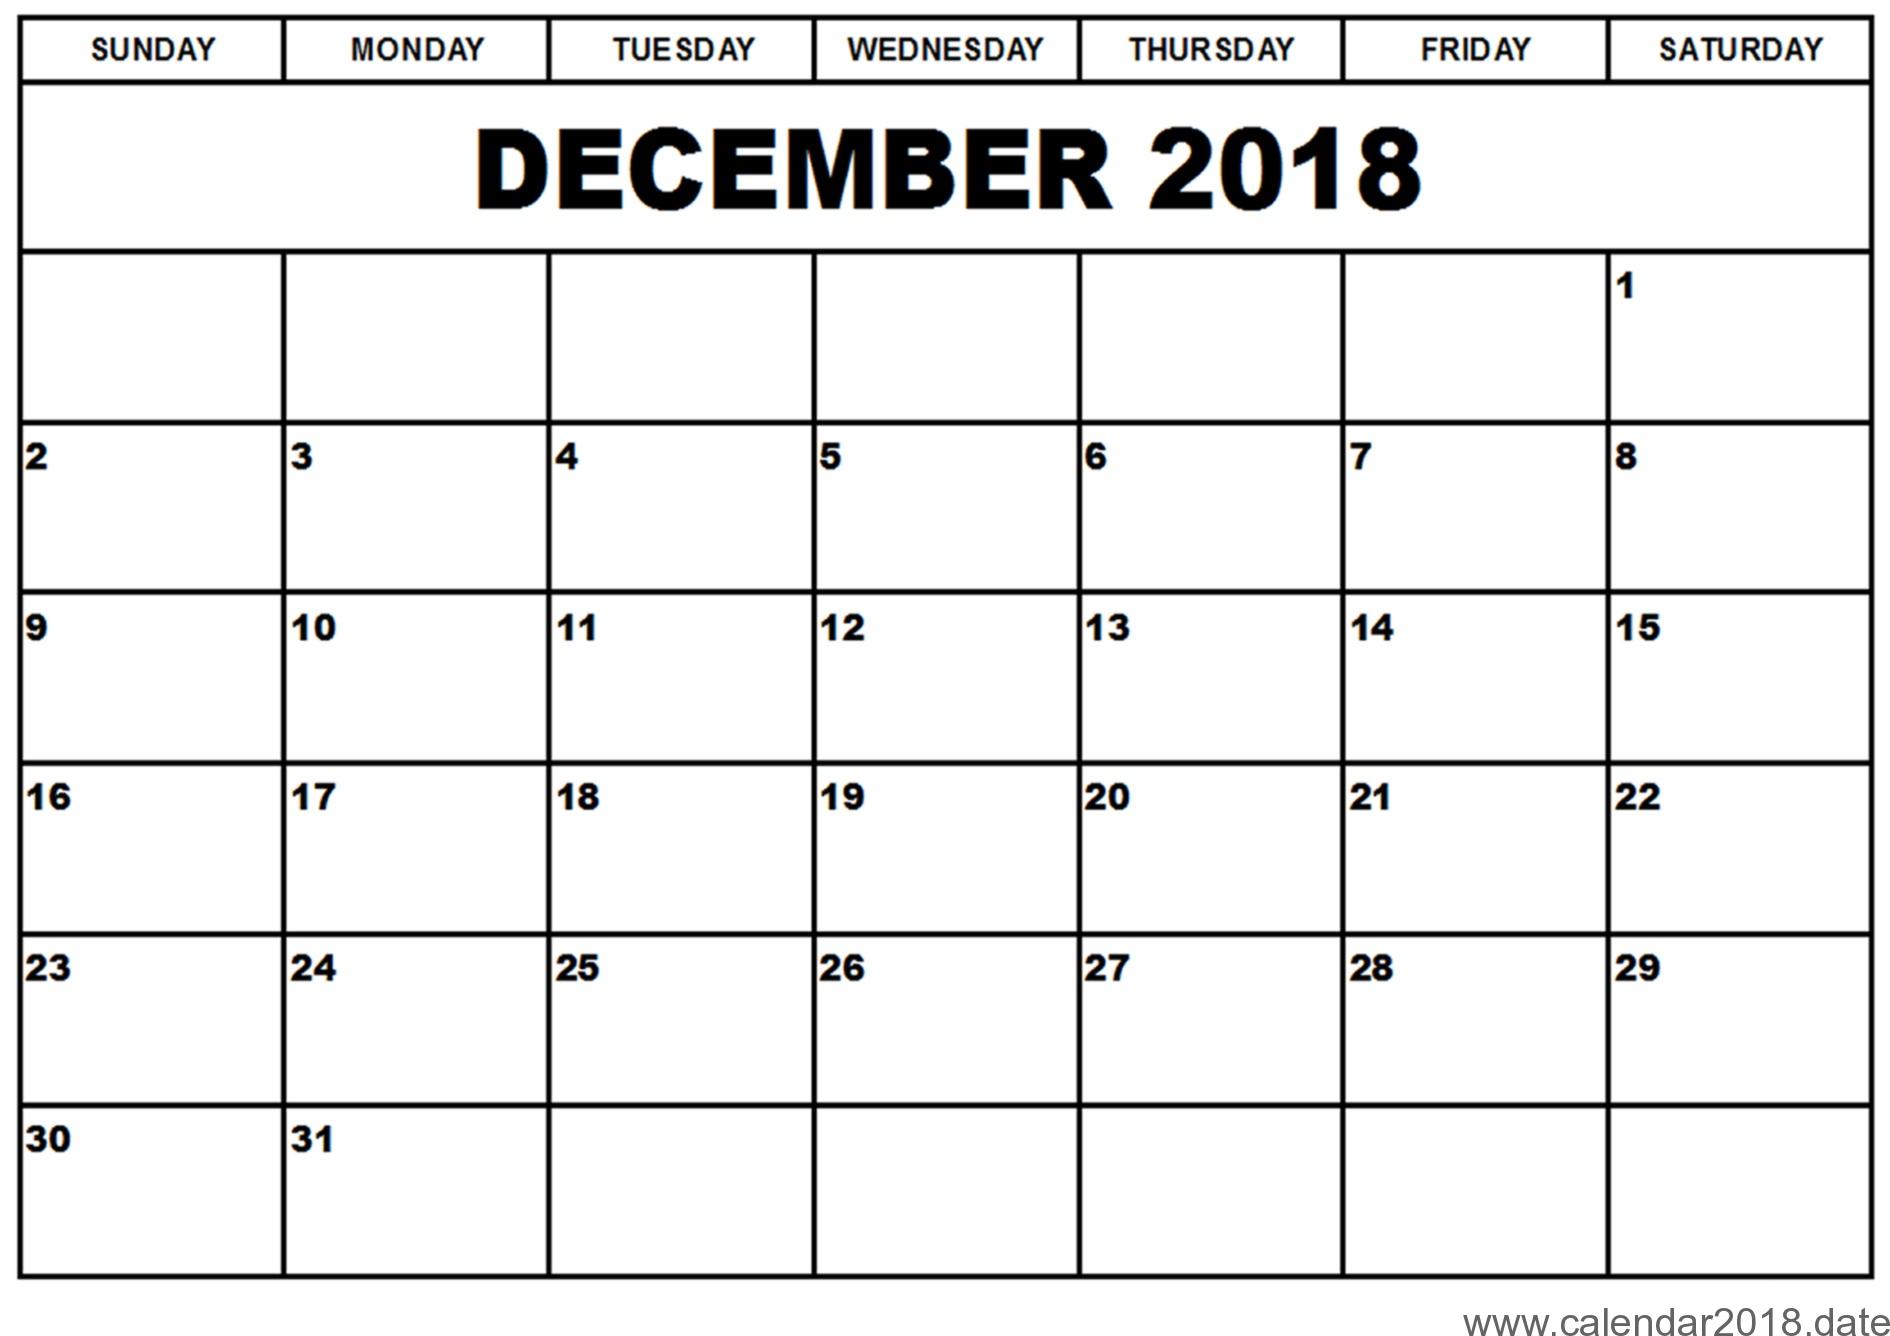 free-calendar-december-2018-medical-resume